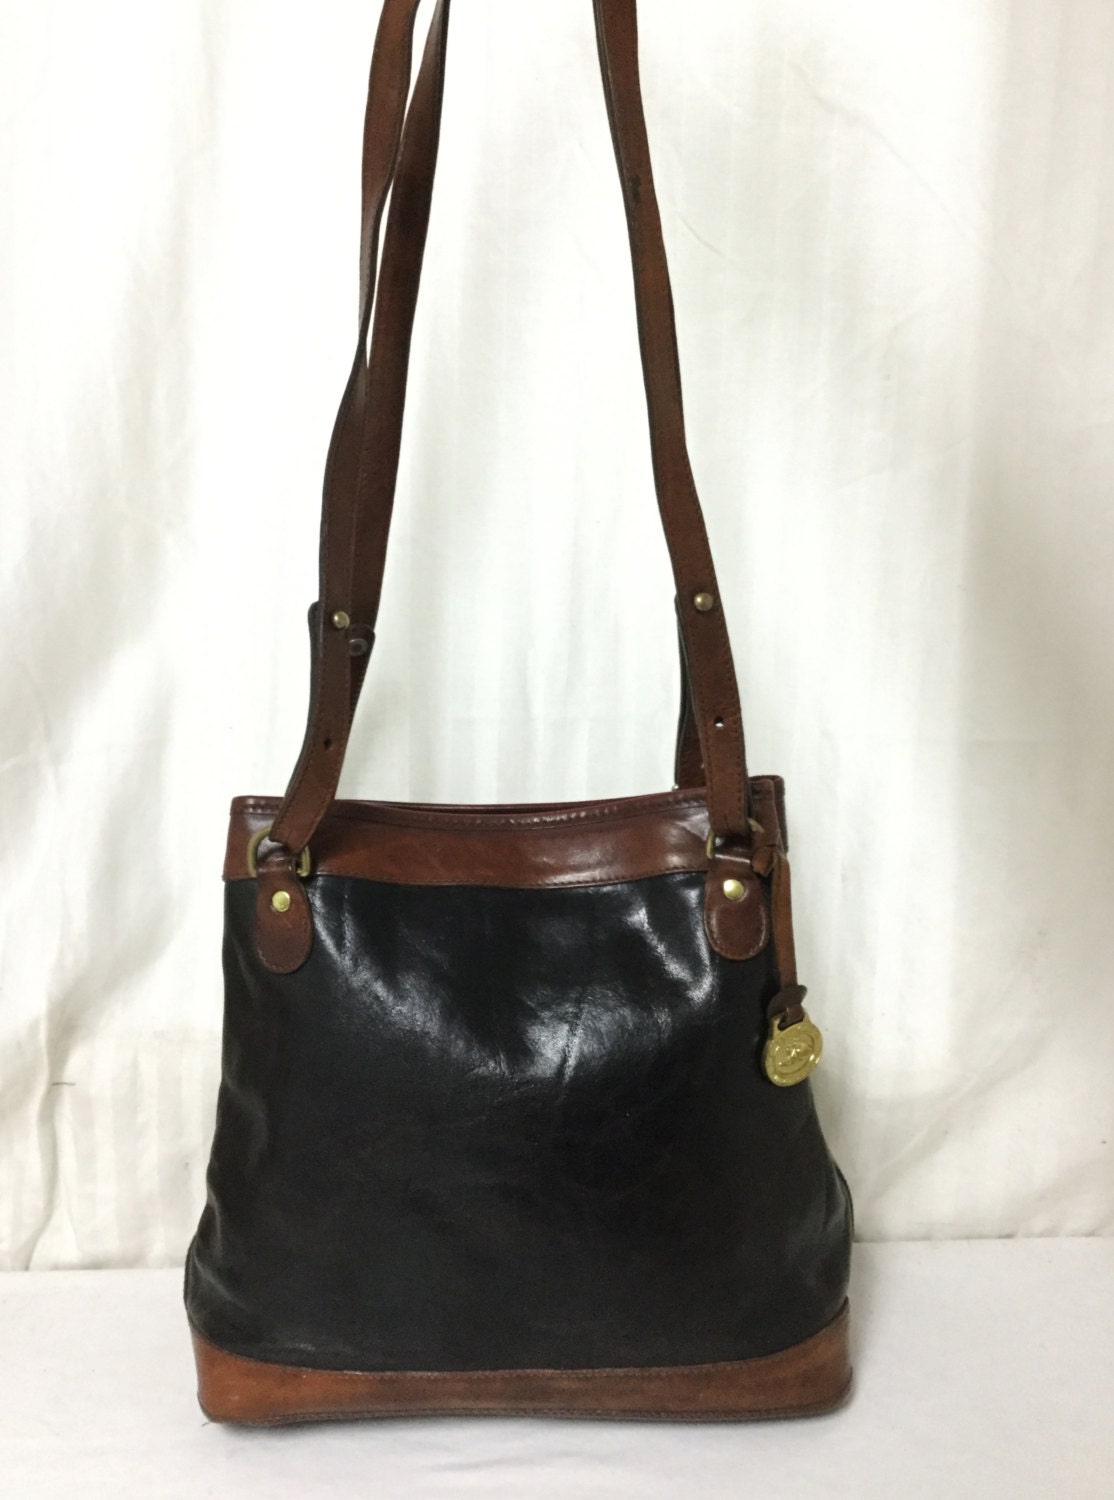 Brahmin leather purseBags purses Leather Purse Black Brown | Etsy